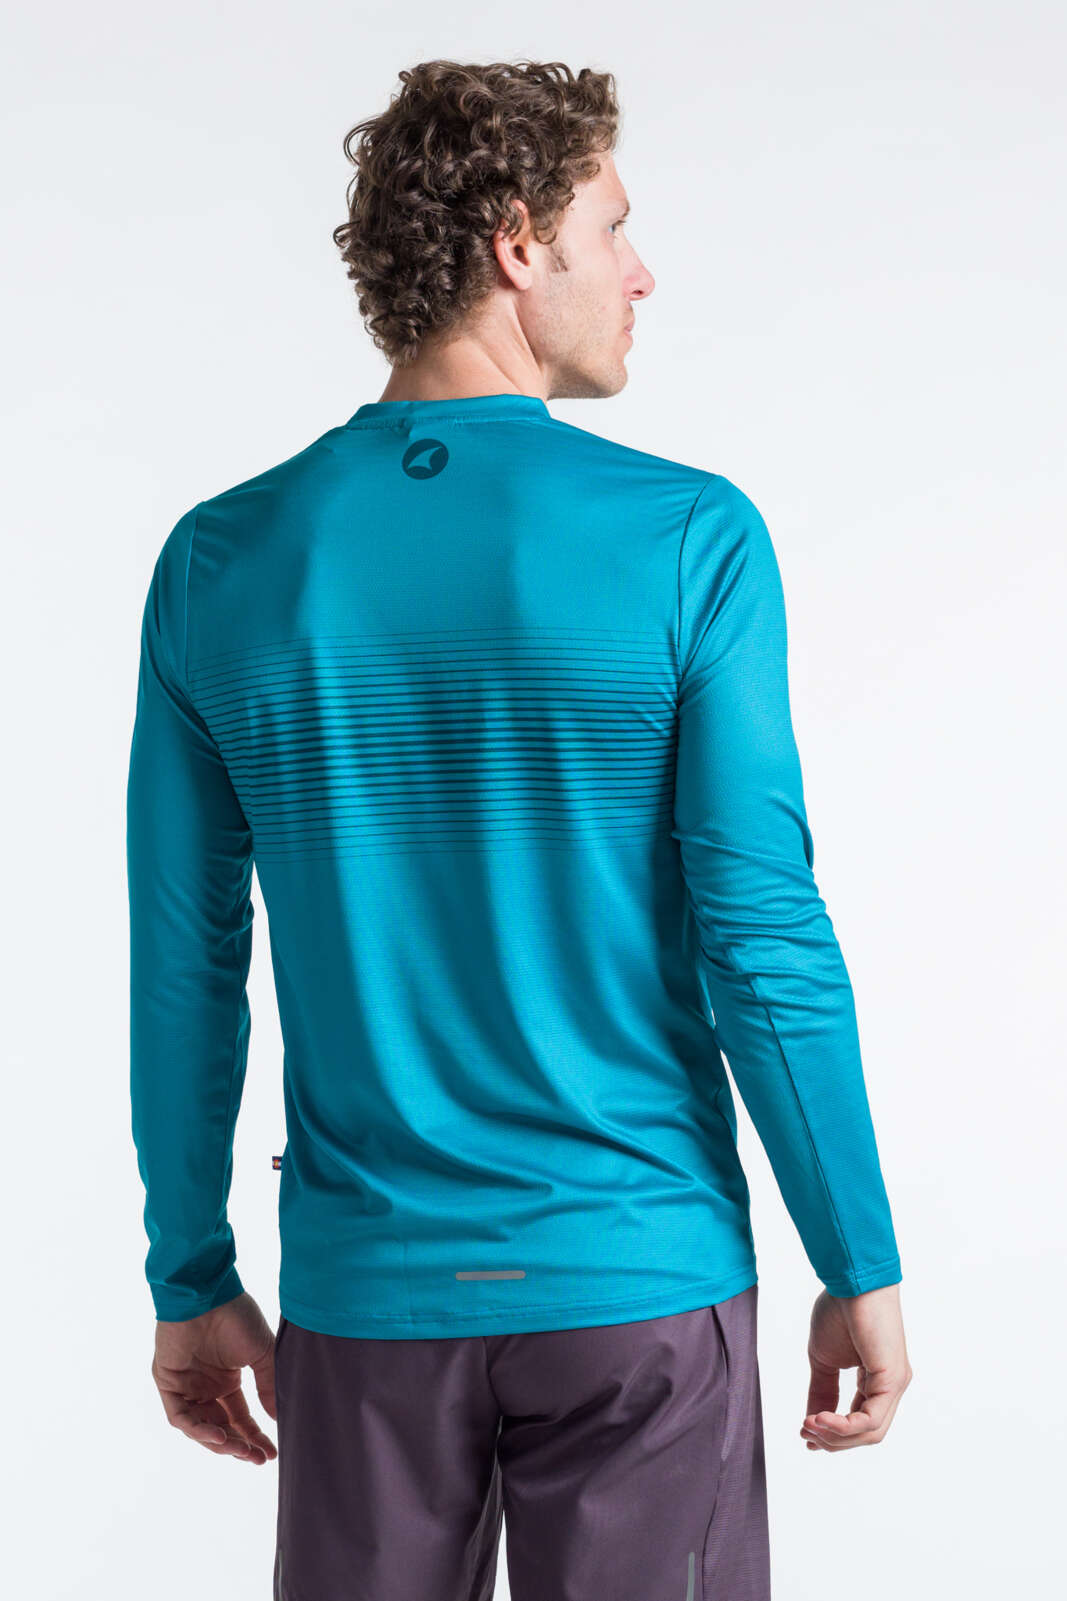 Men's Long Sleeve Running Shirt - Back View